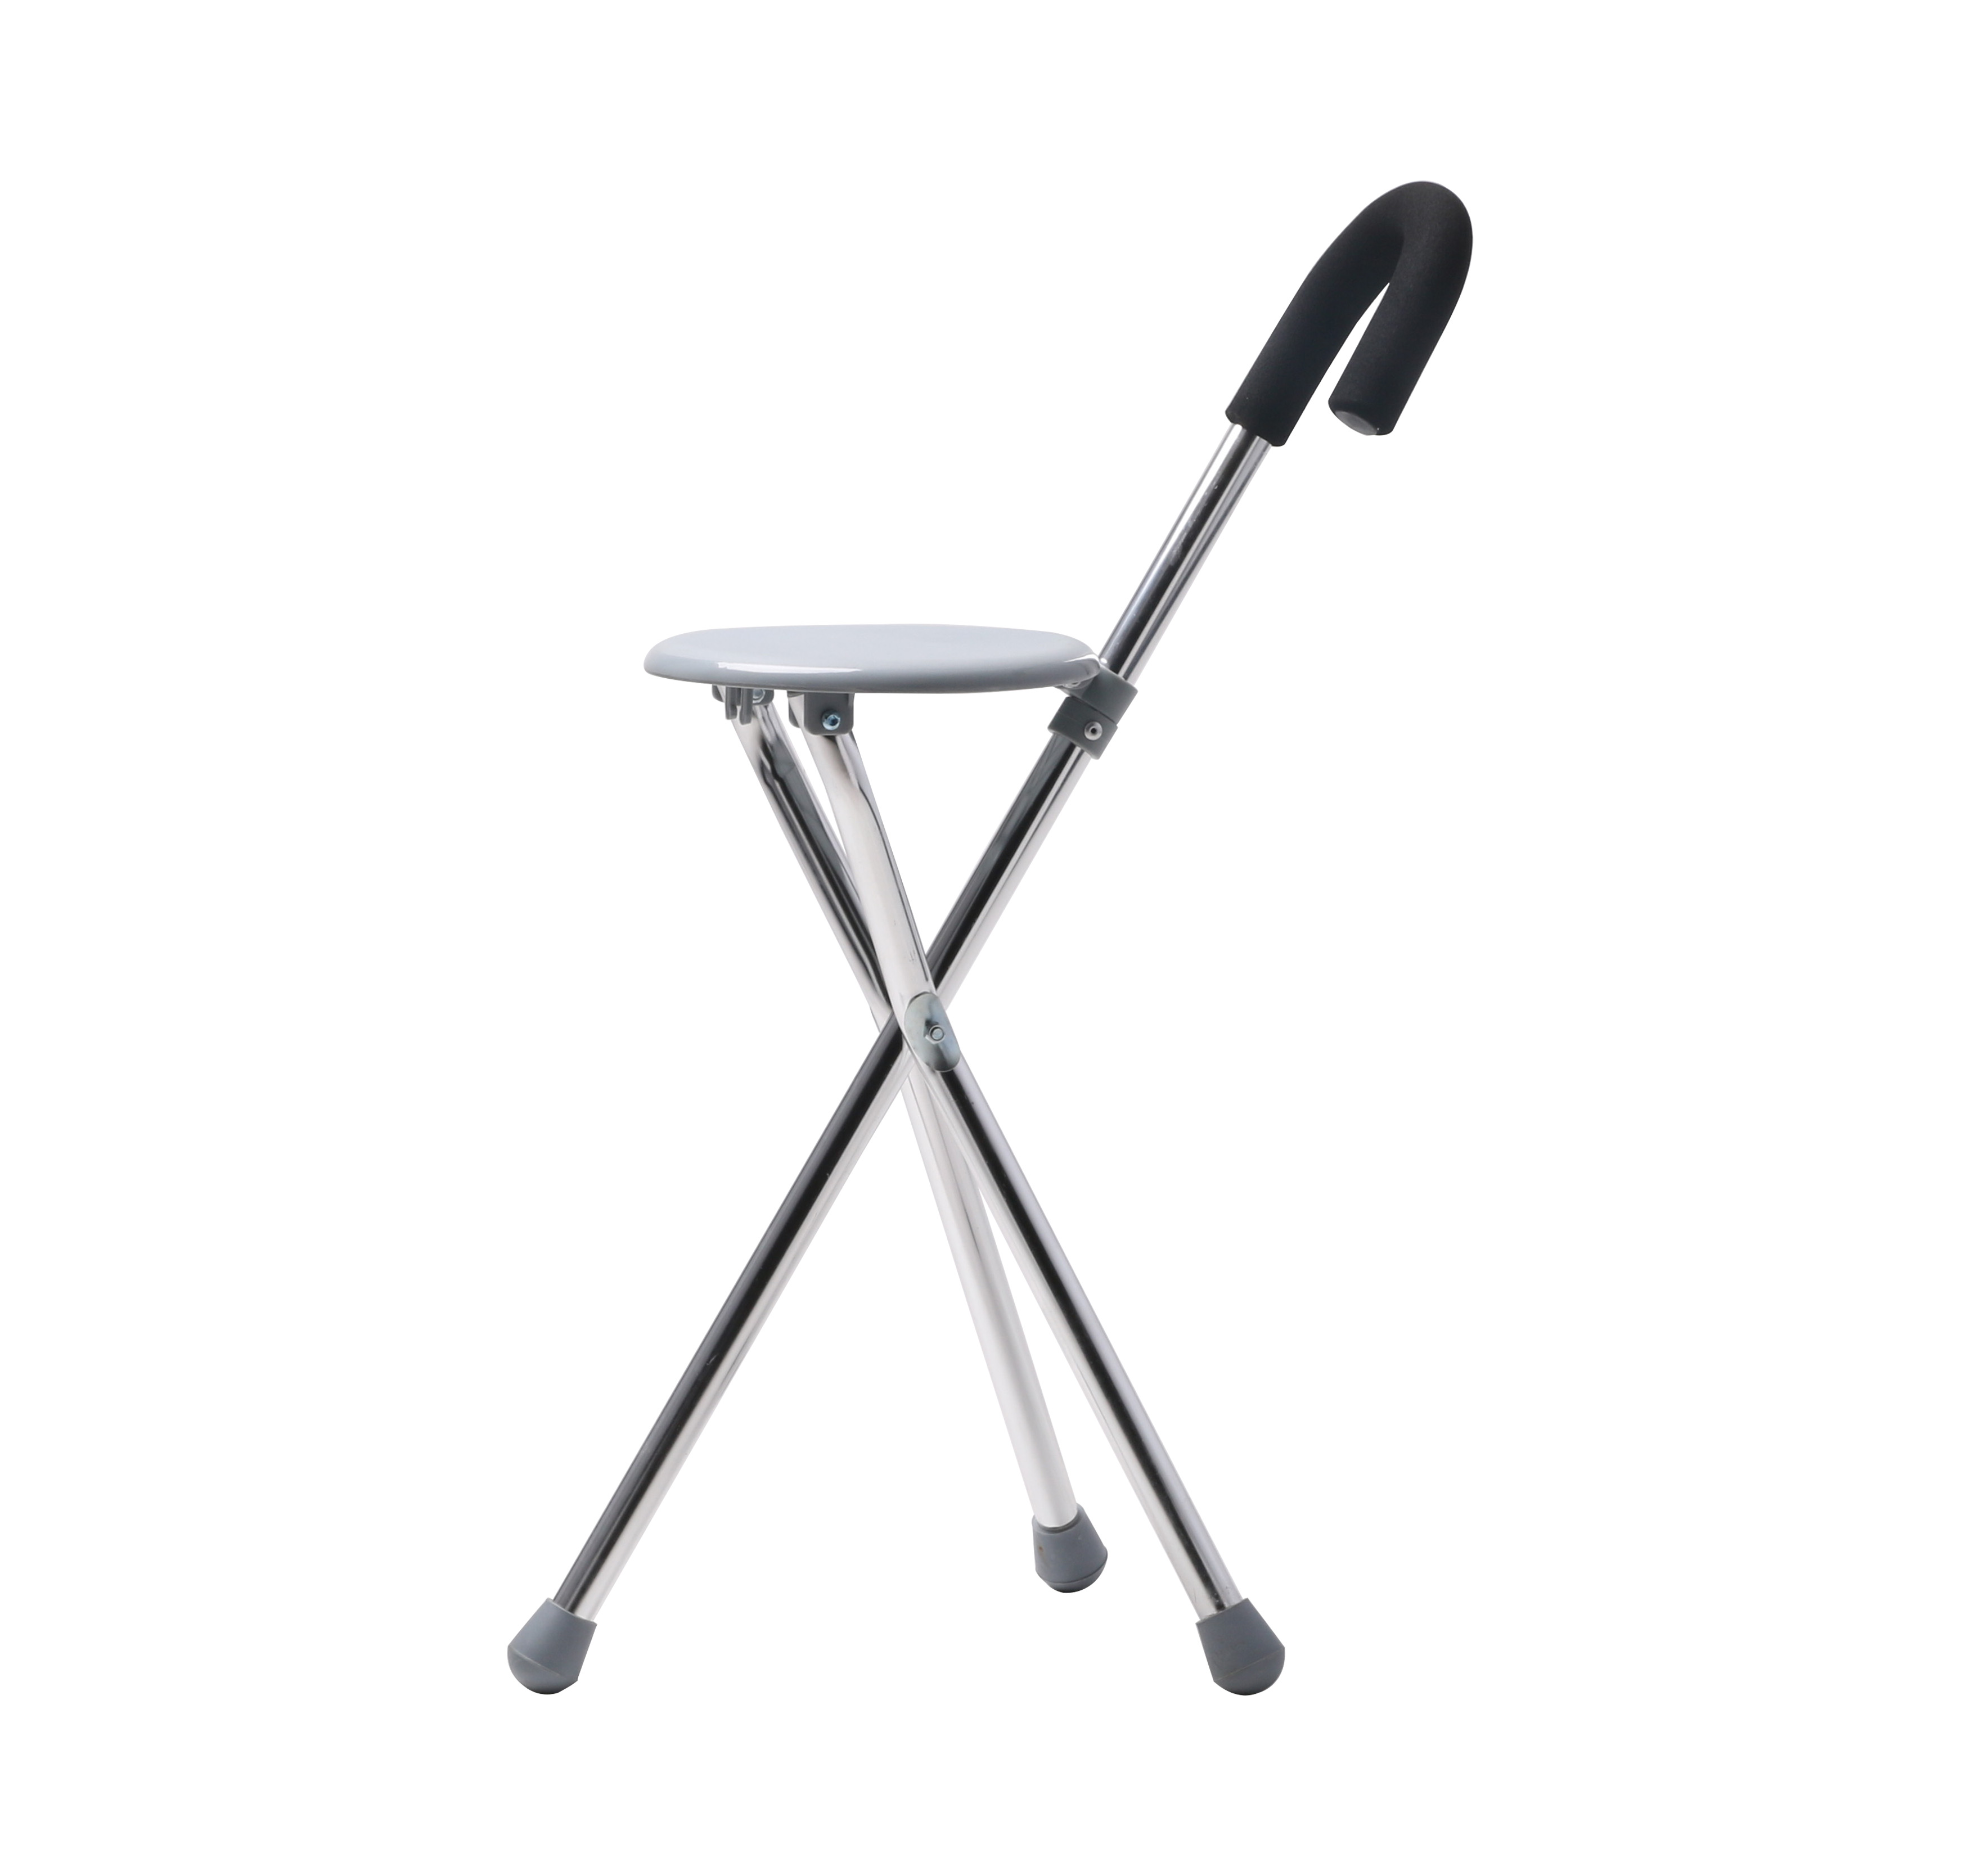 adjustable elderly aluminium alloy walking stick with seat